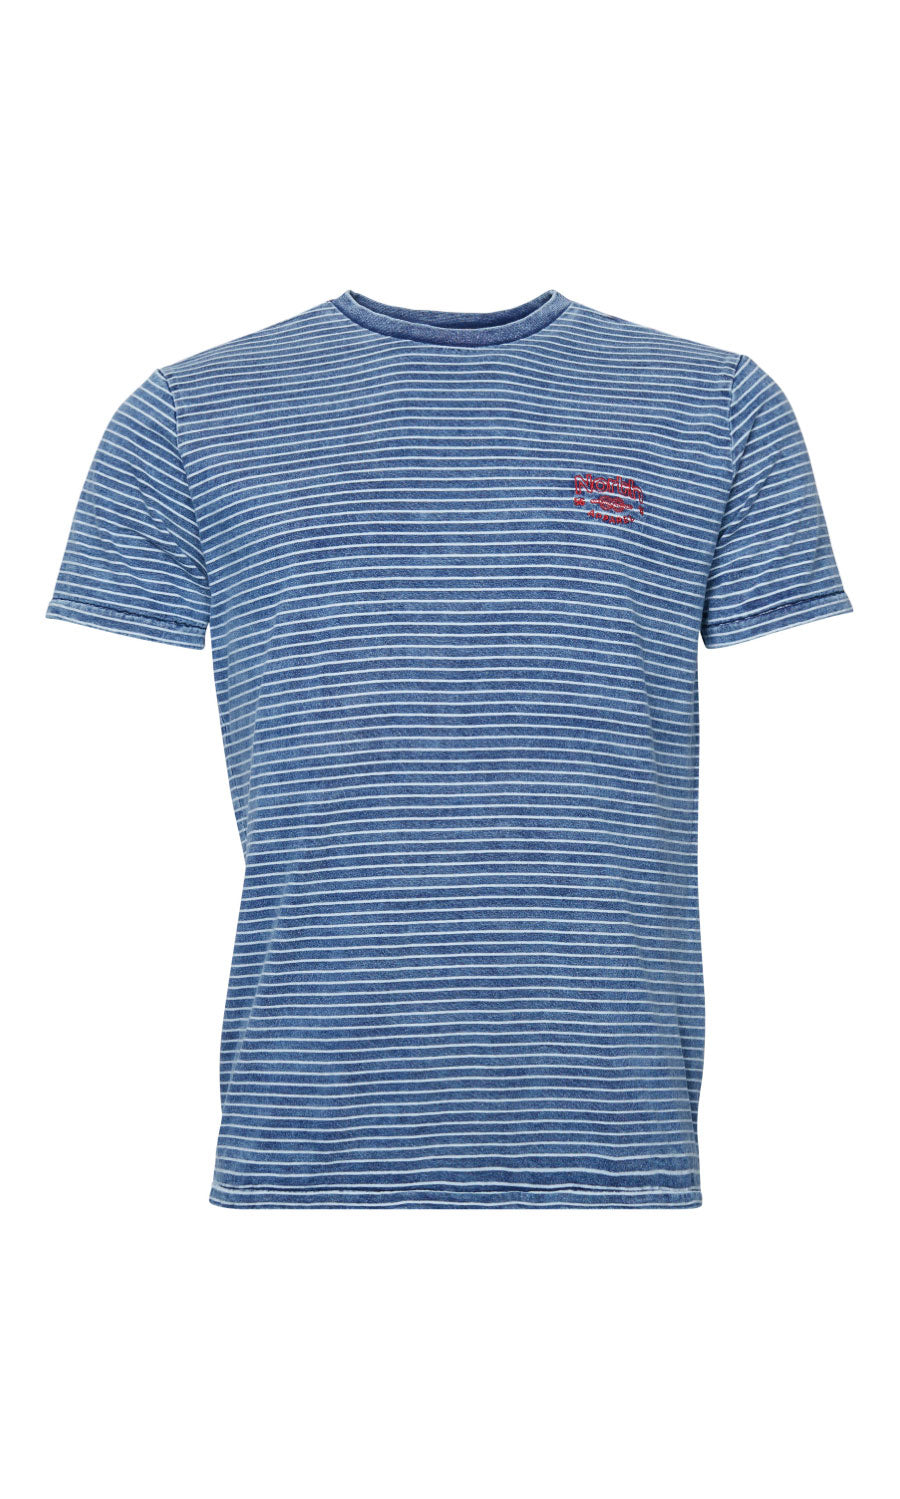 North 56°4 | Sailing Striped T-Shirt in Indigo Blue | Fortmens